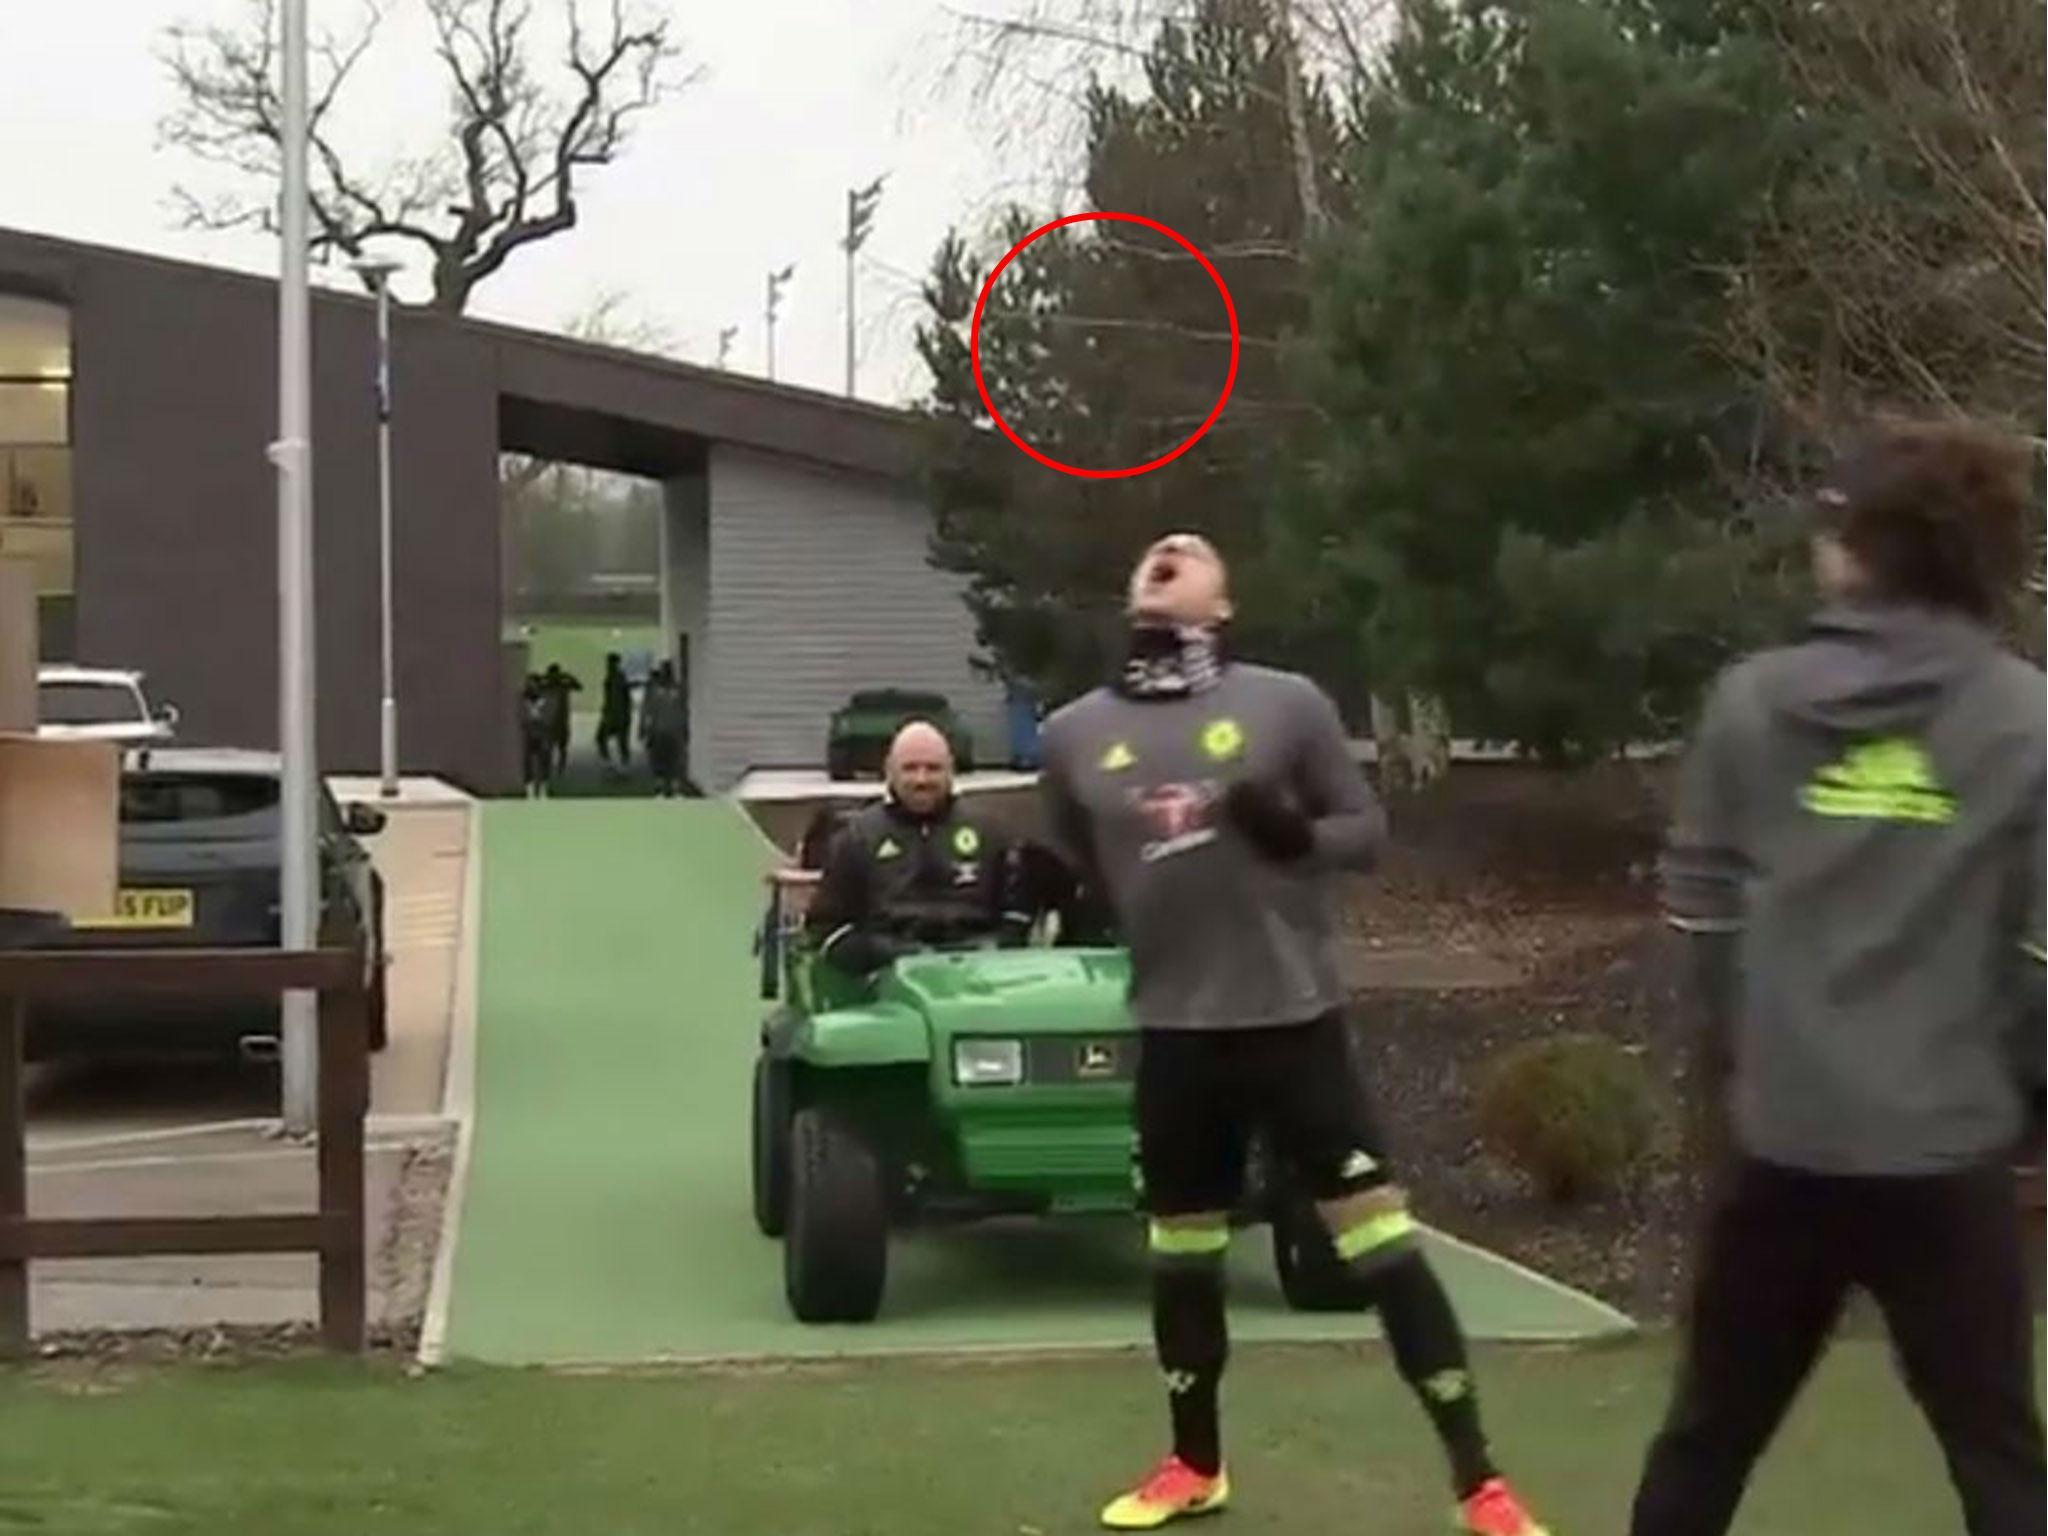 David Luiz and Chelsea training ground staff look on in awe